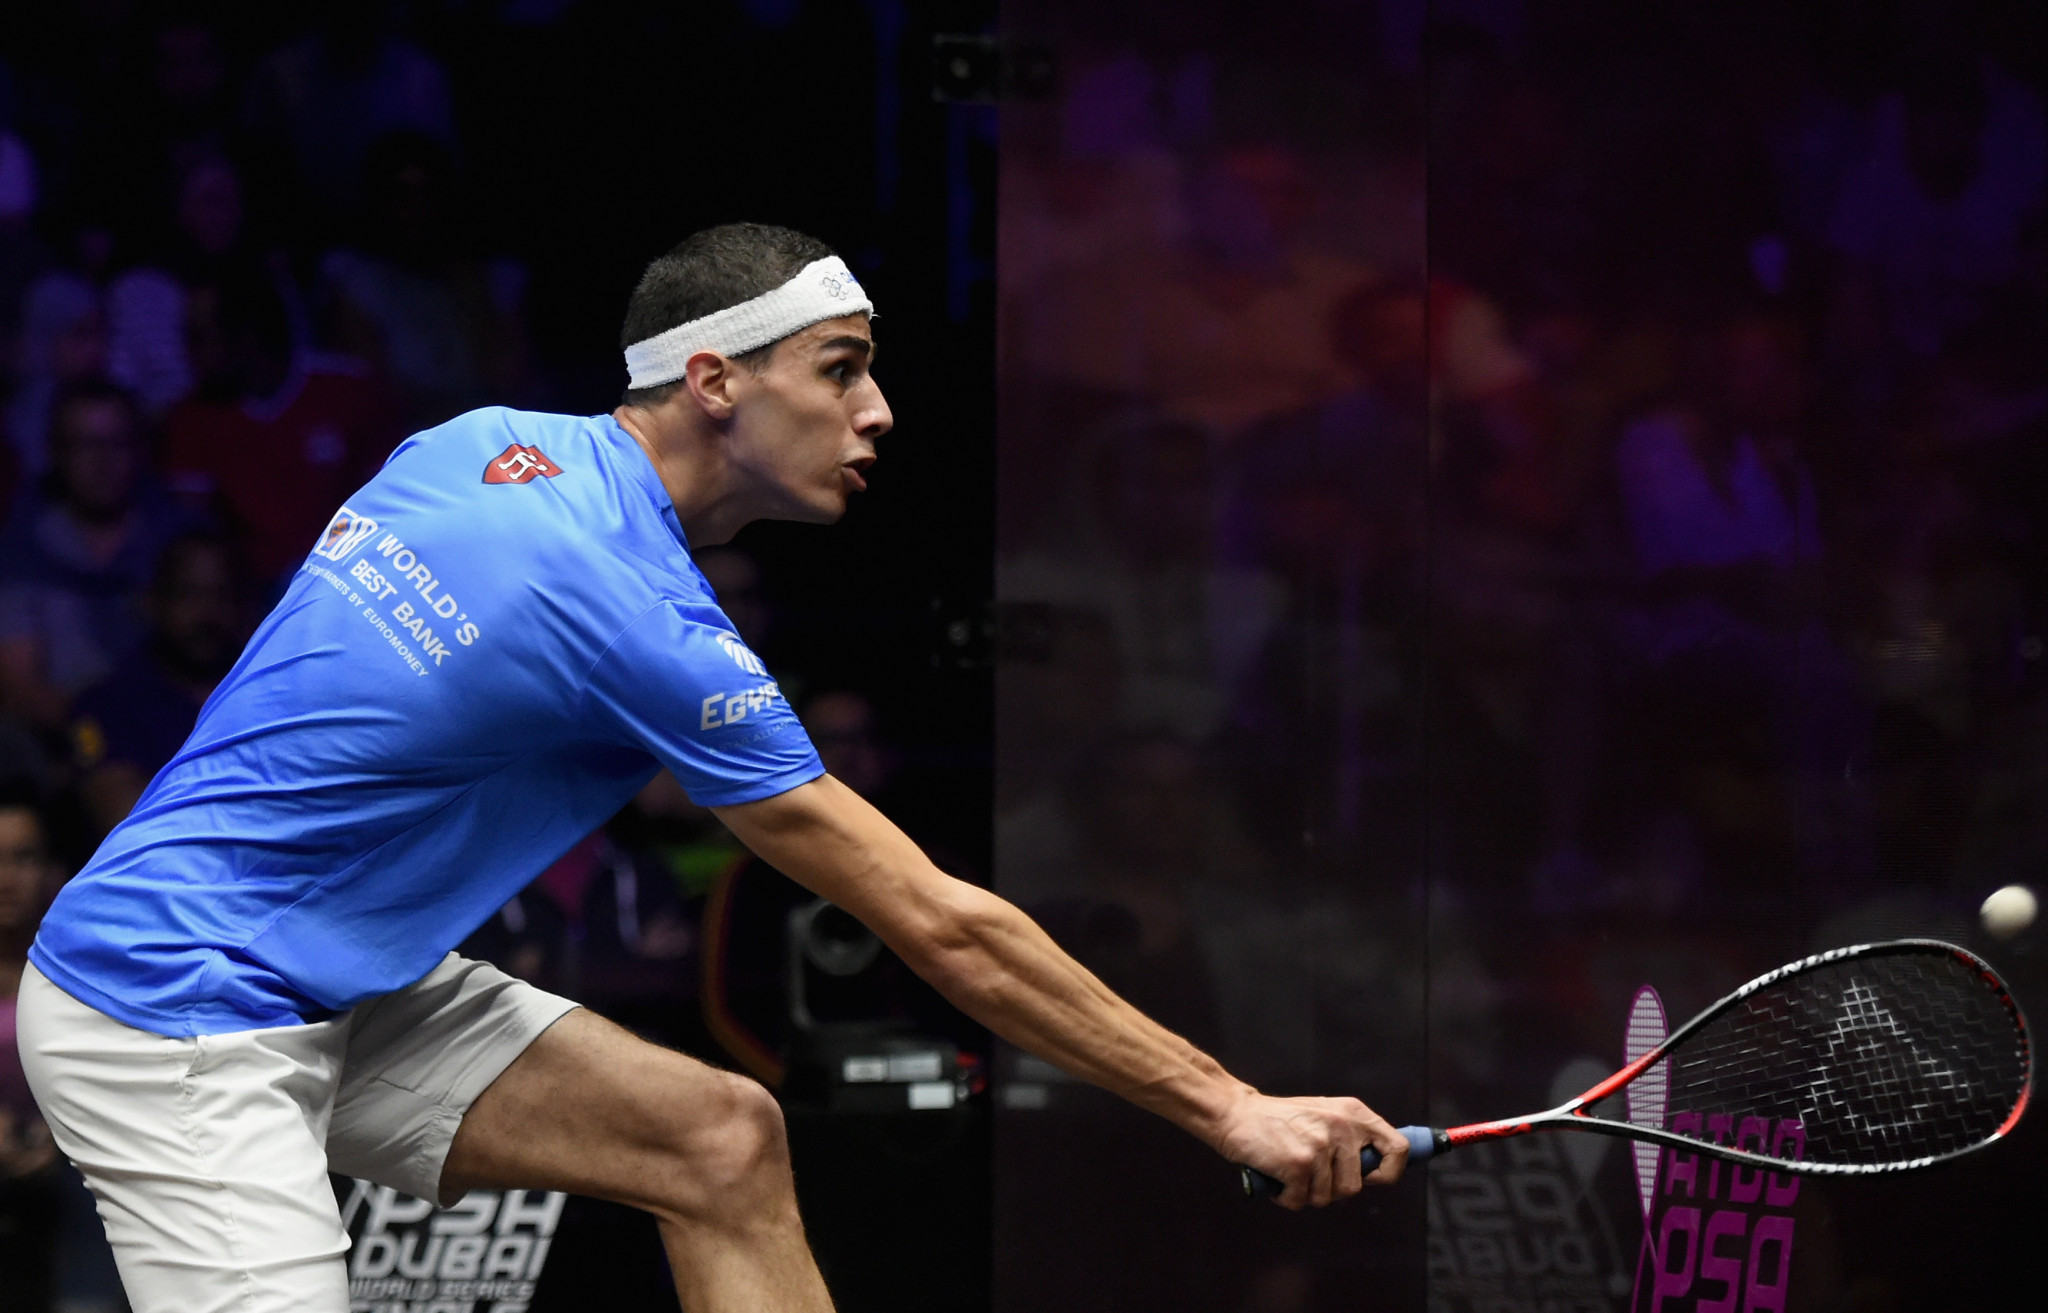 Men's top seed Farag overcomes scare to progress at British Open squash